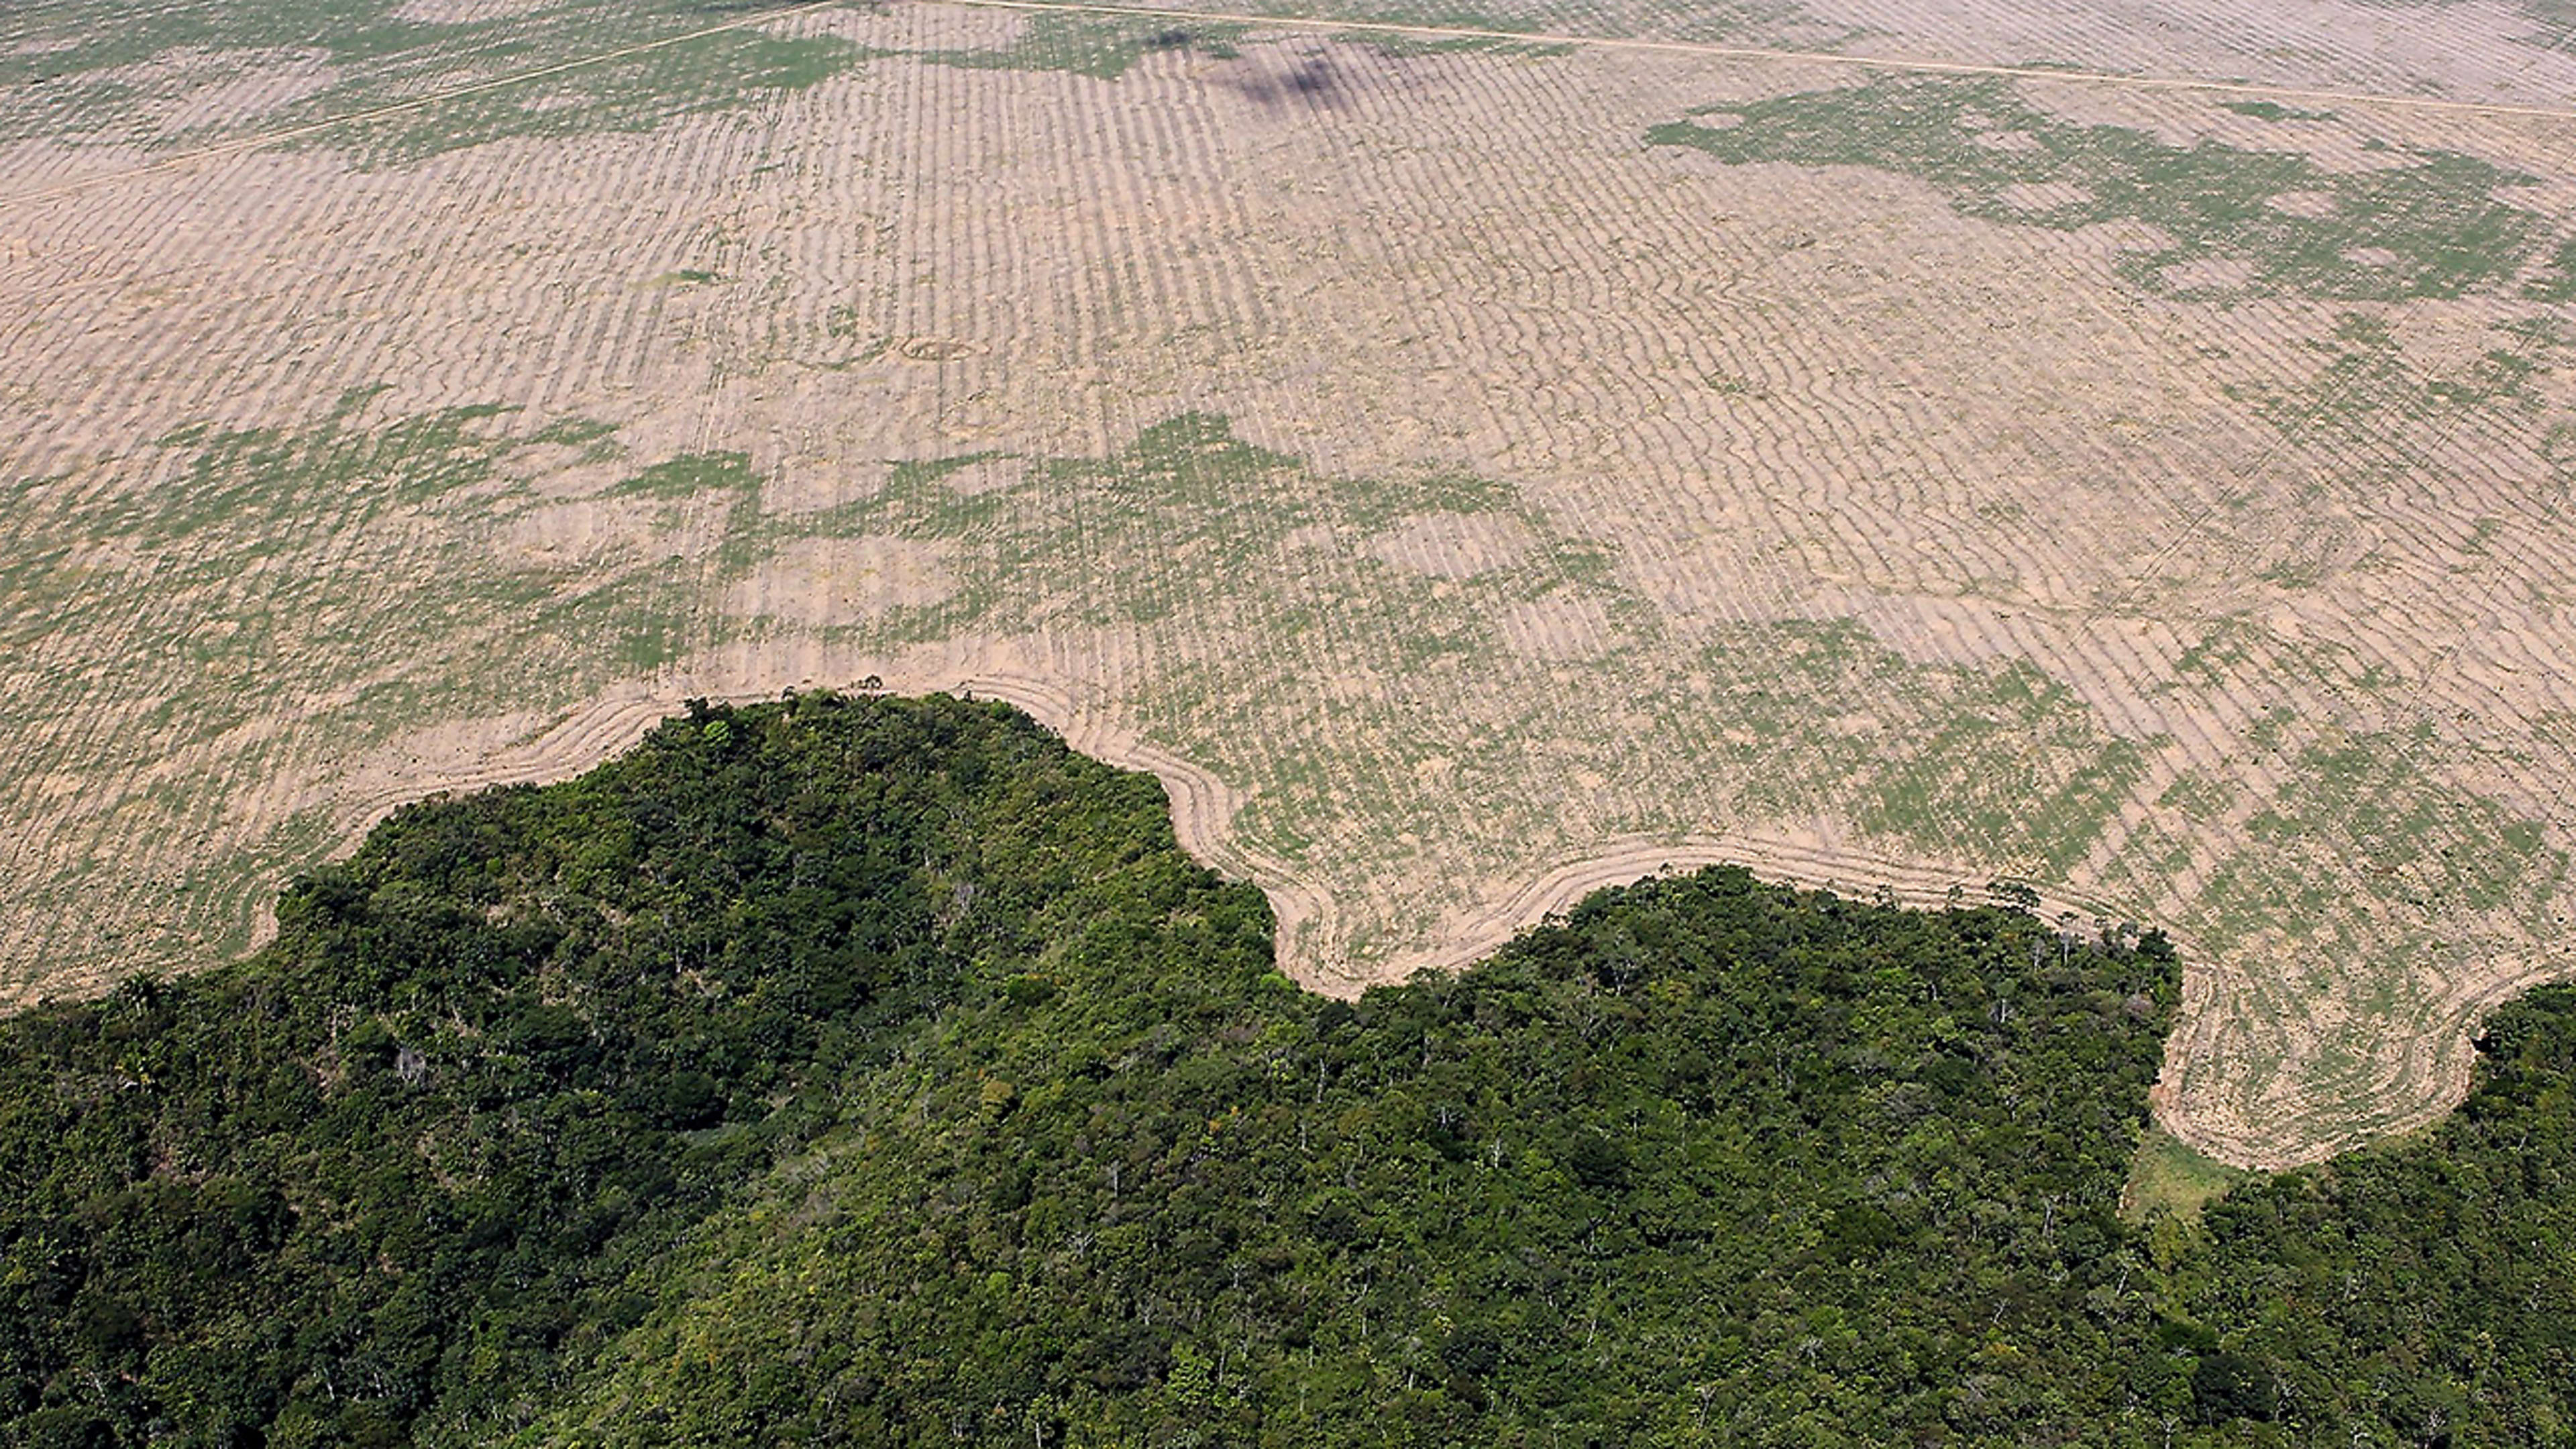 4 essential reads on Brazil’s vanishing Amazon rainforest